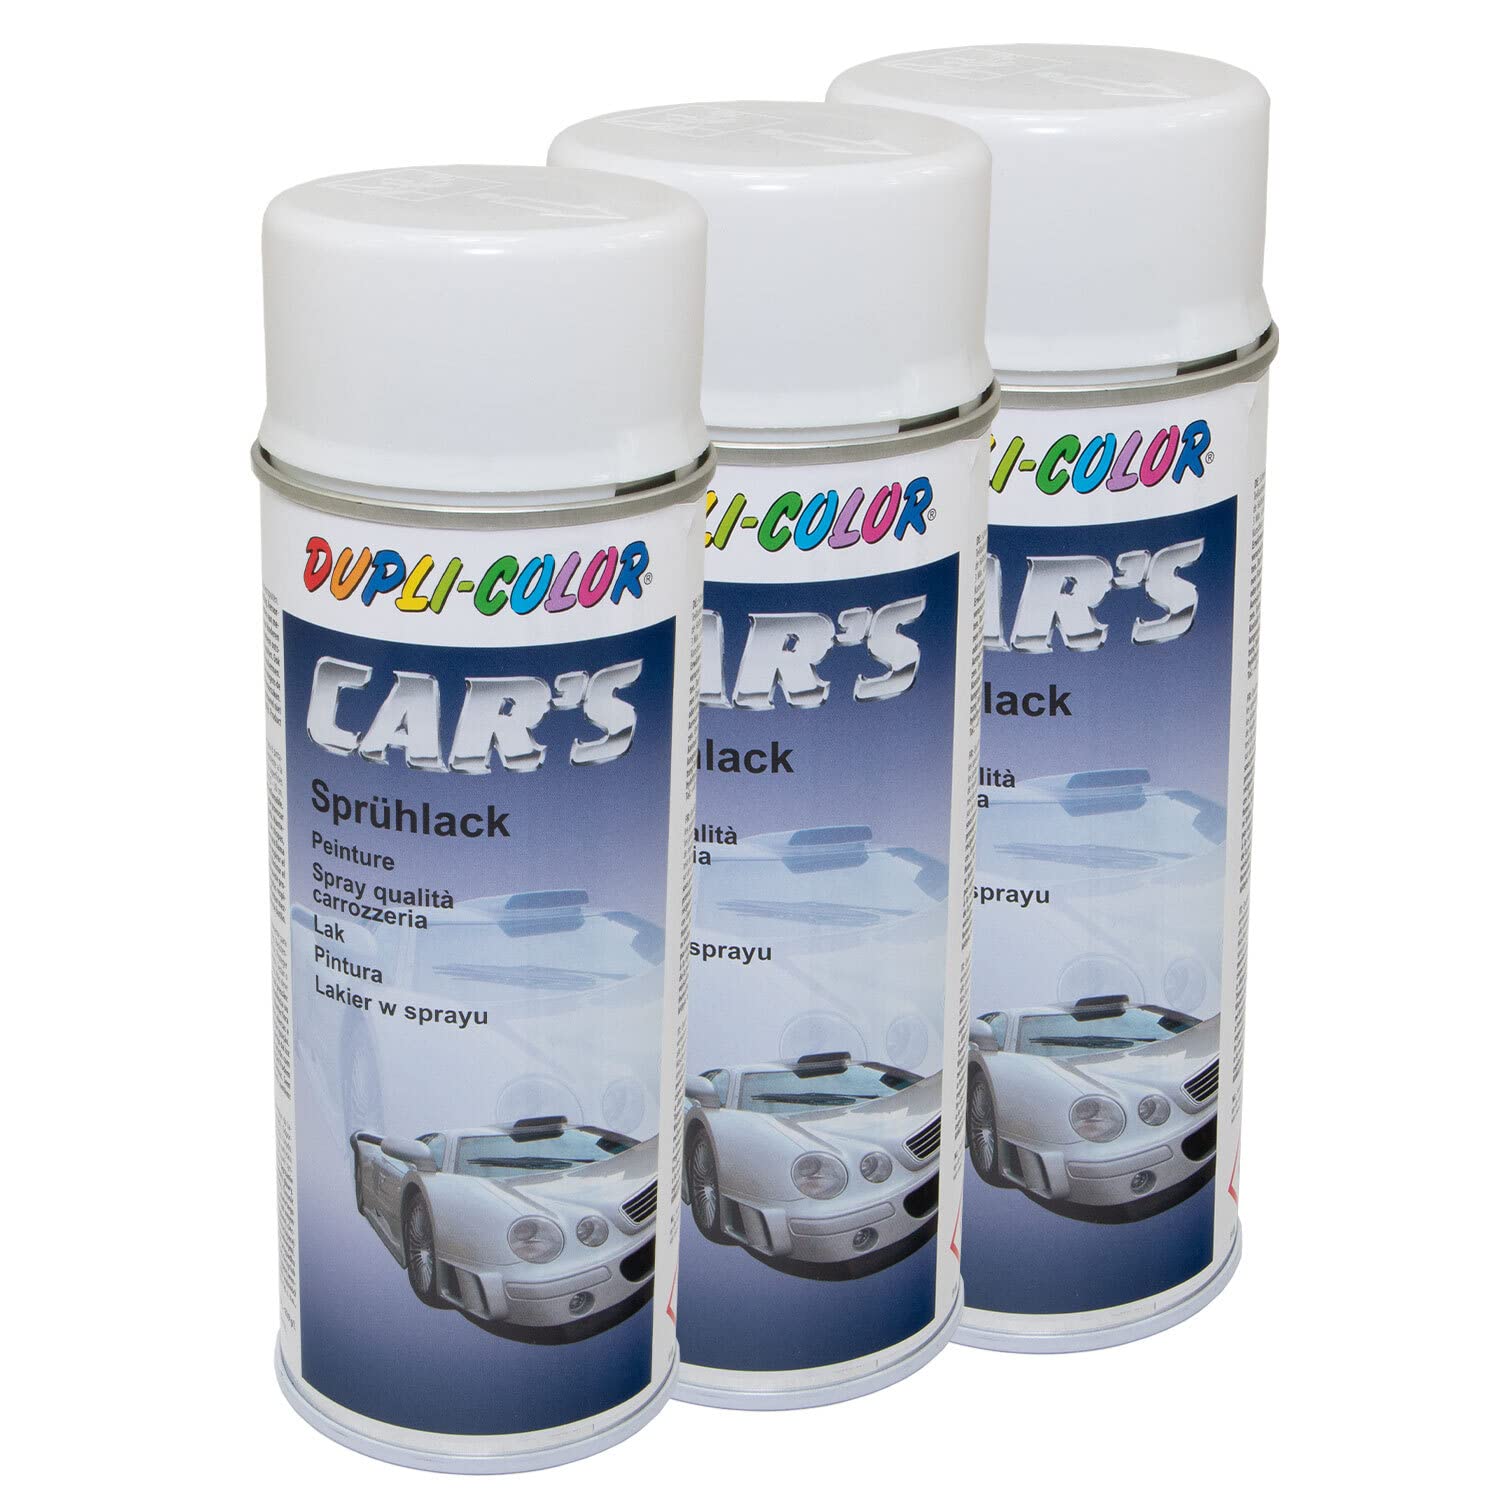 Lackspray Spraydose Sprühlack Cars Dupli Color 652233 weiss seidenmatt 3 X 400 ml von DUPLI_bundle